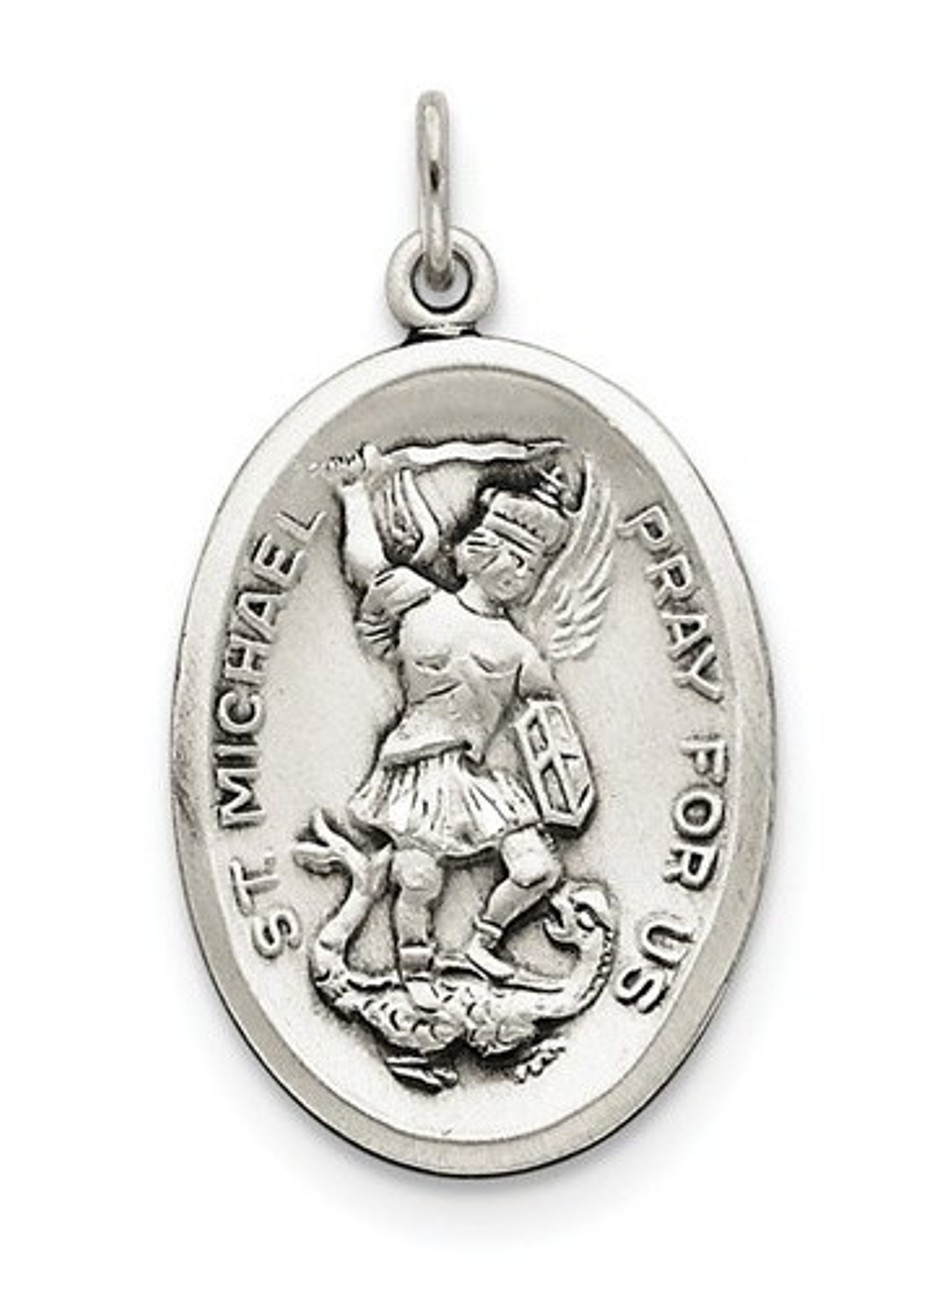 Sterling Silver Saint Michael Medal Charm Pendant (35X20 MM)